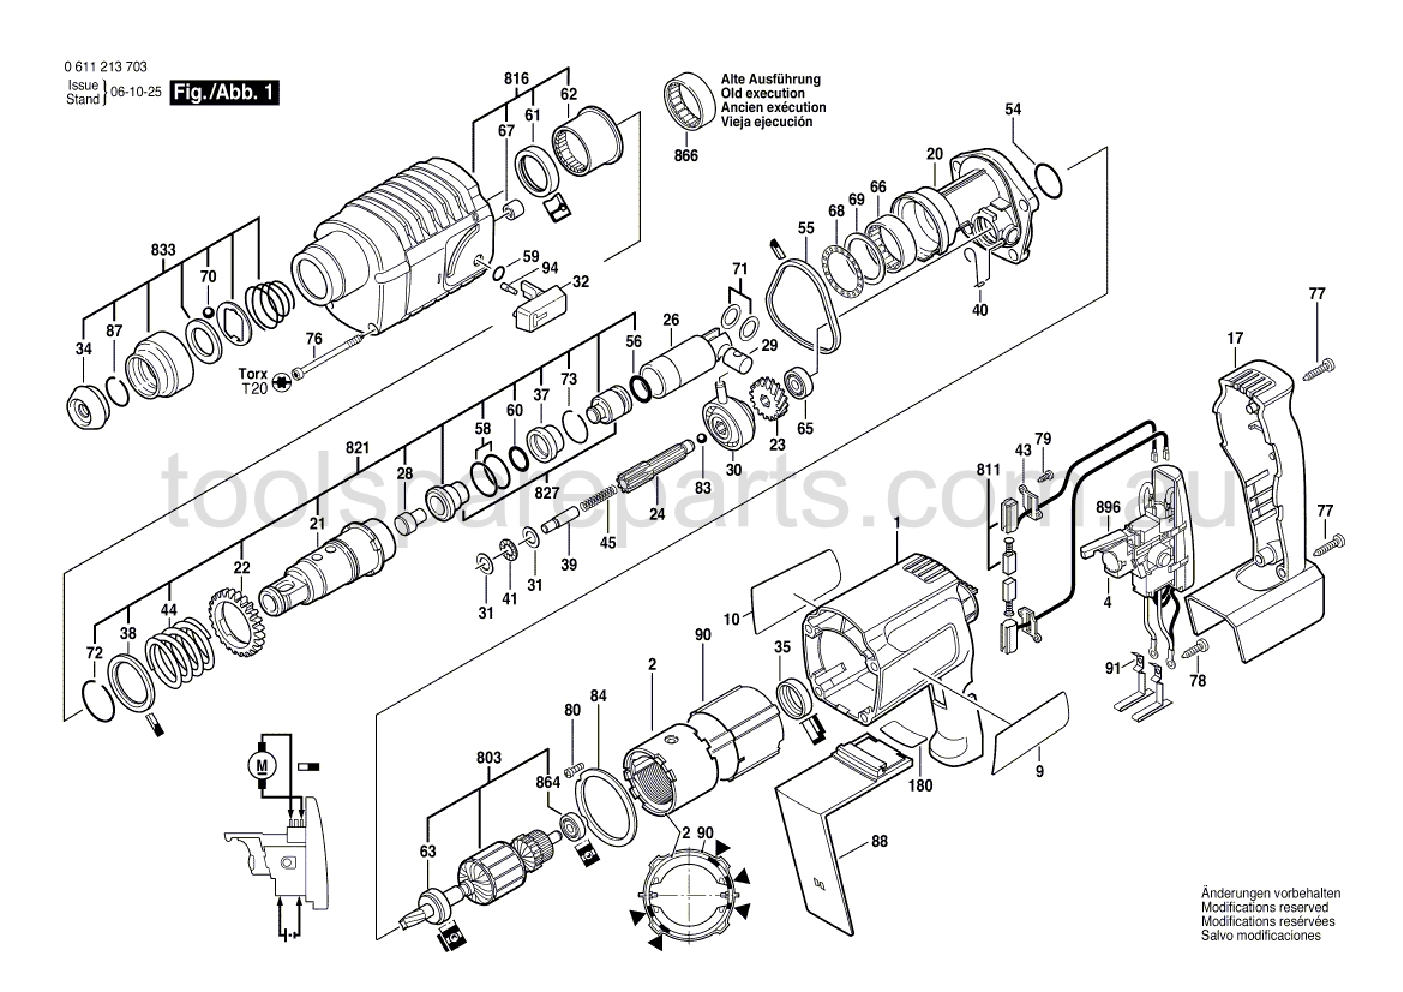 Bosch GBH 24 VRE 0611213725  Diagram 1